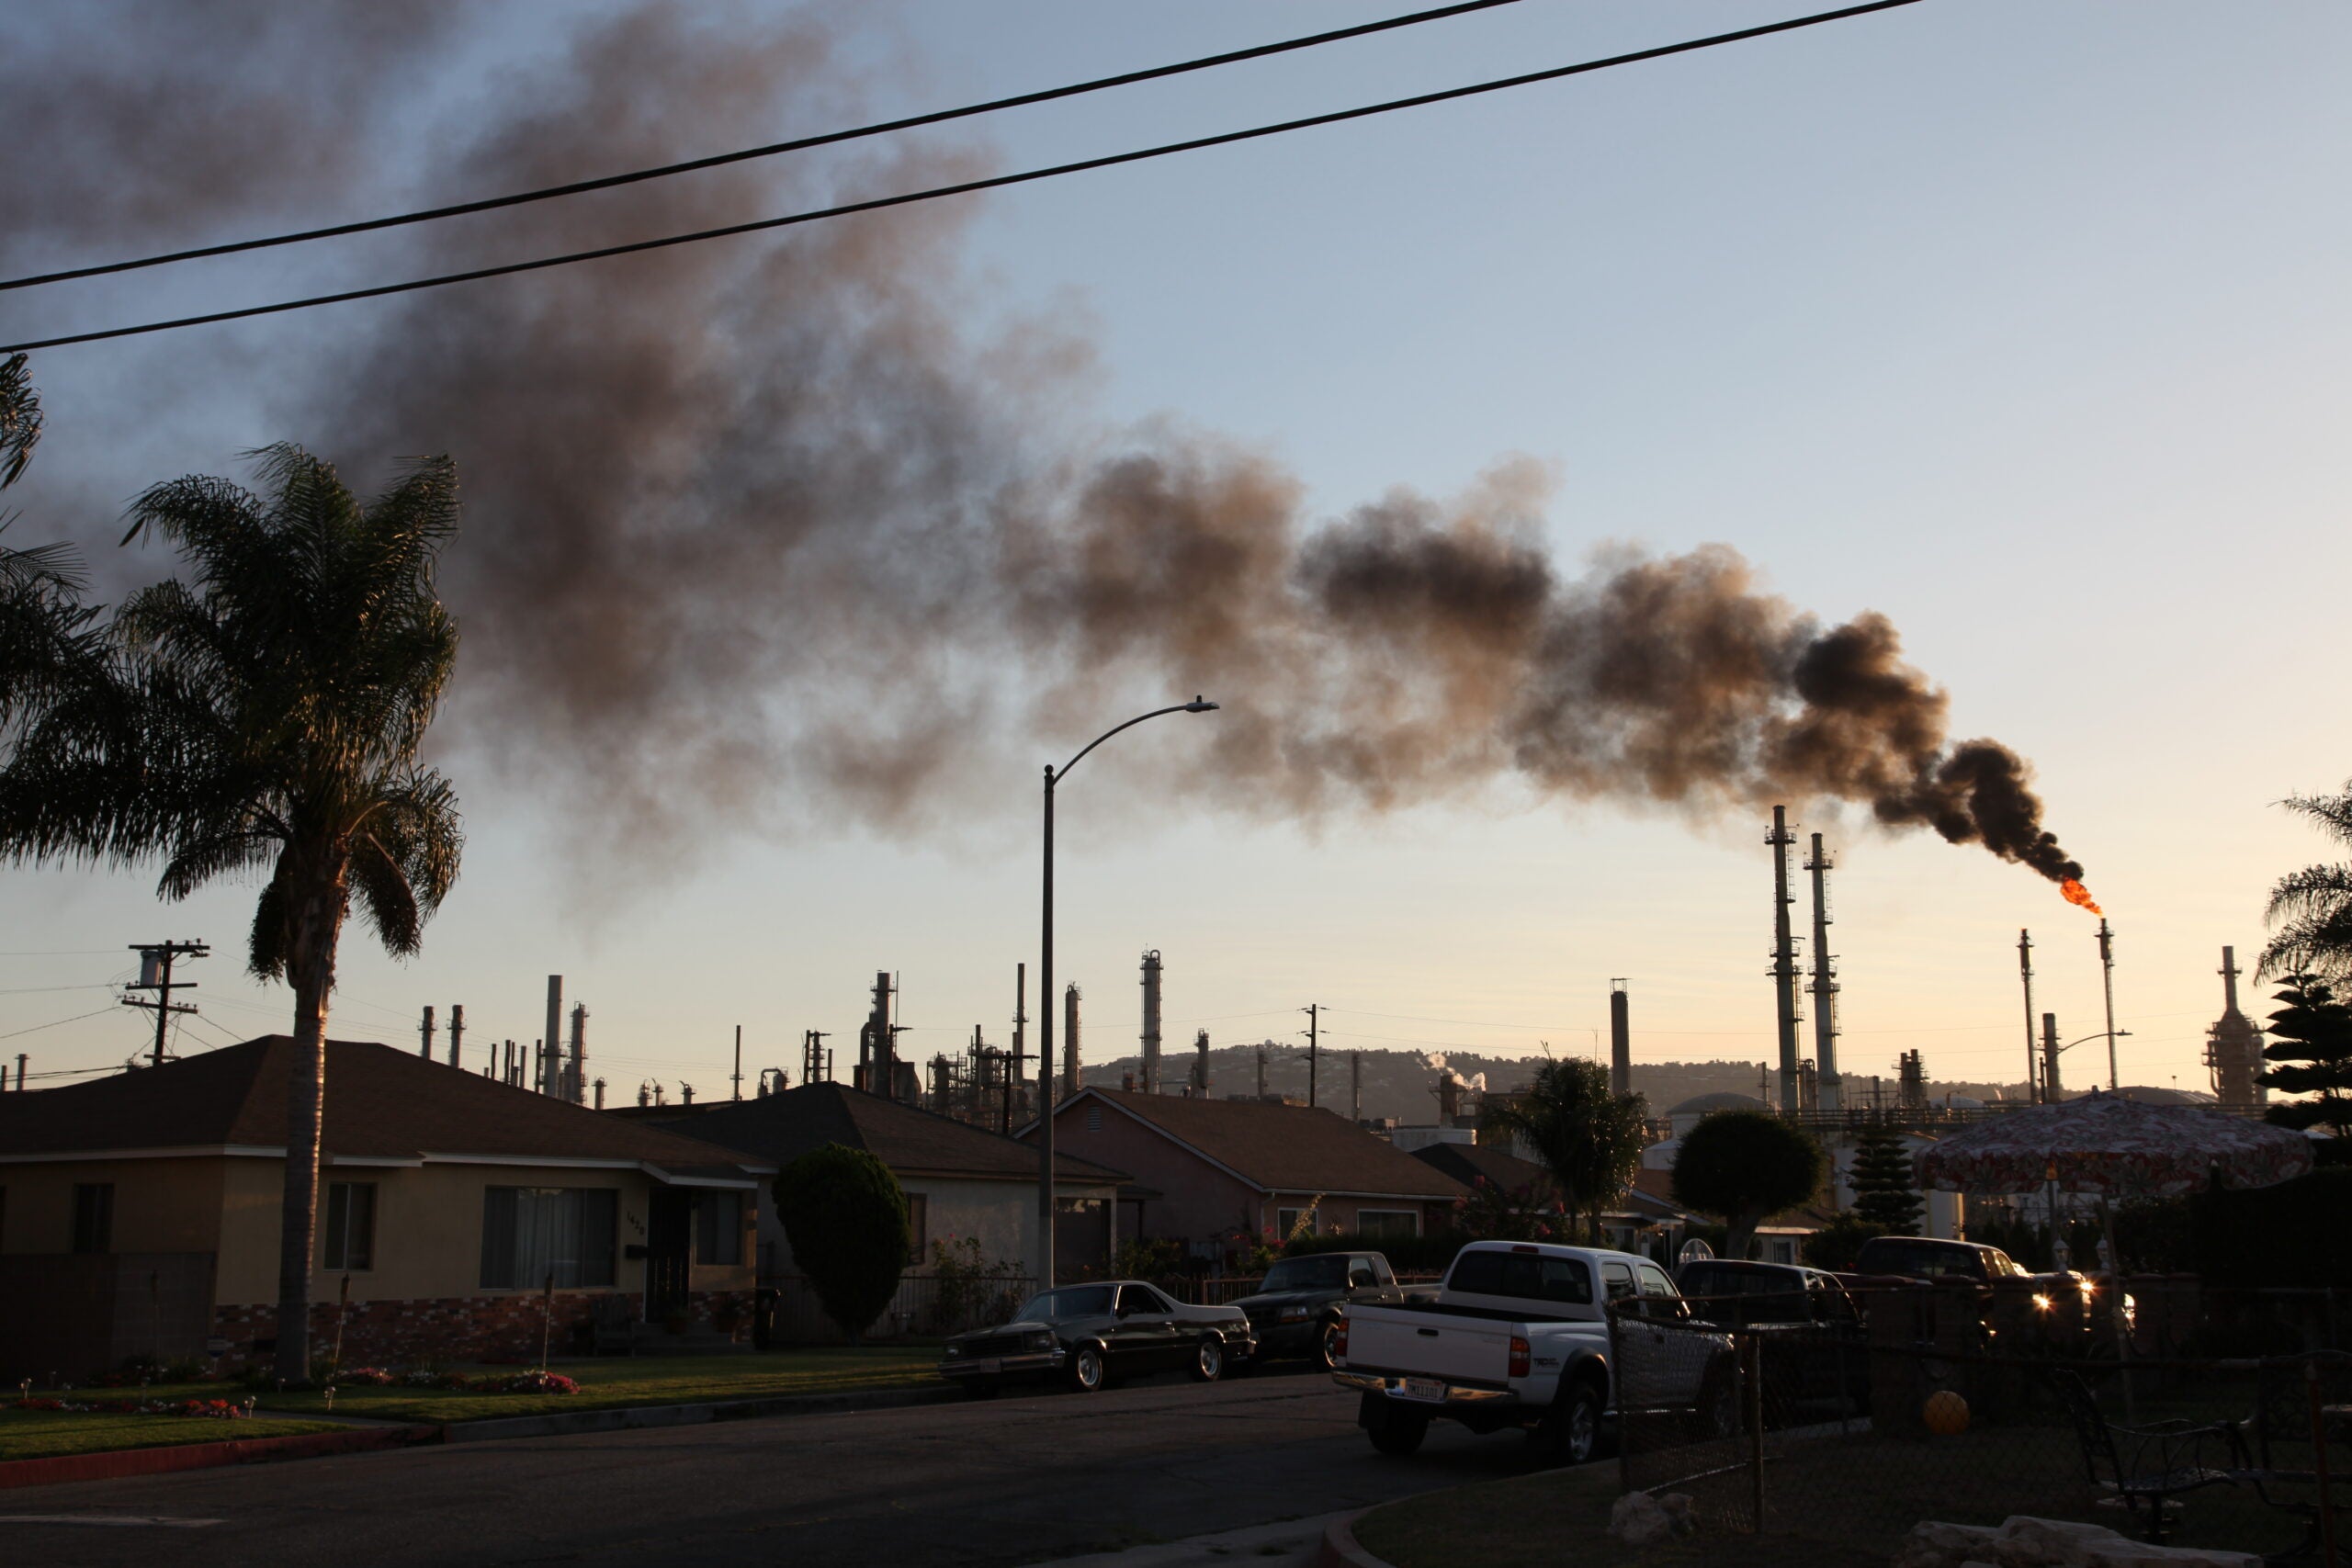 The ConocoPhillips oil refinery in Wilmington, California.
(Photo courtesy of Jesse Marquez)